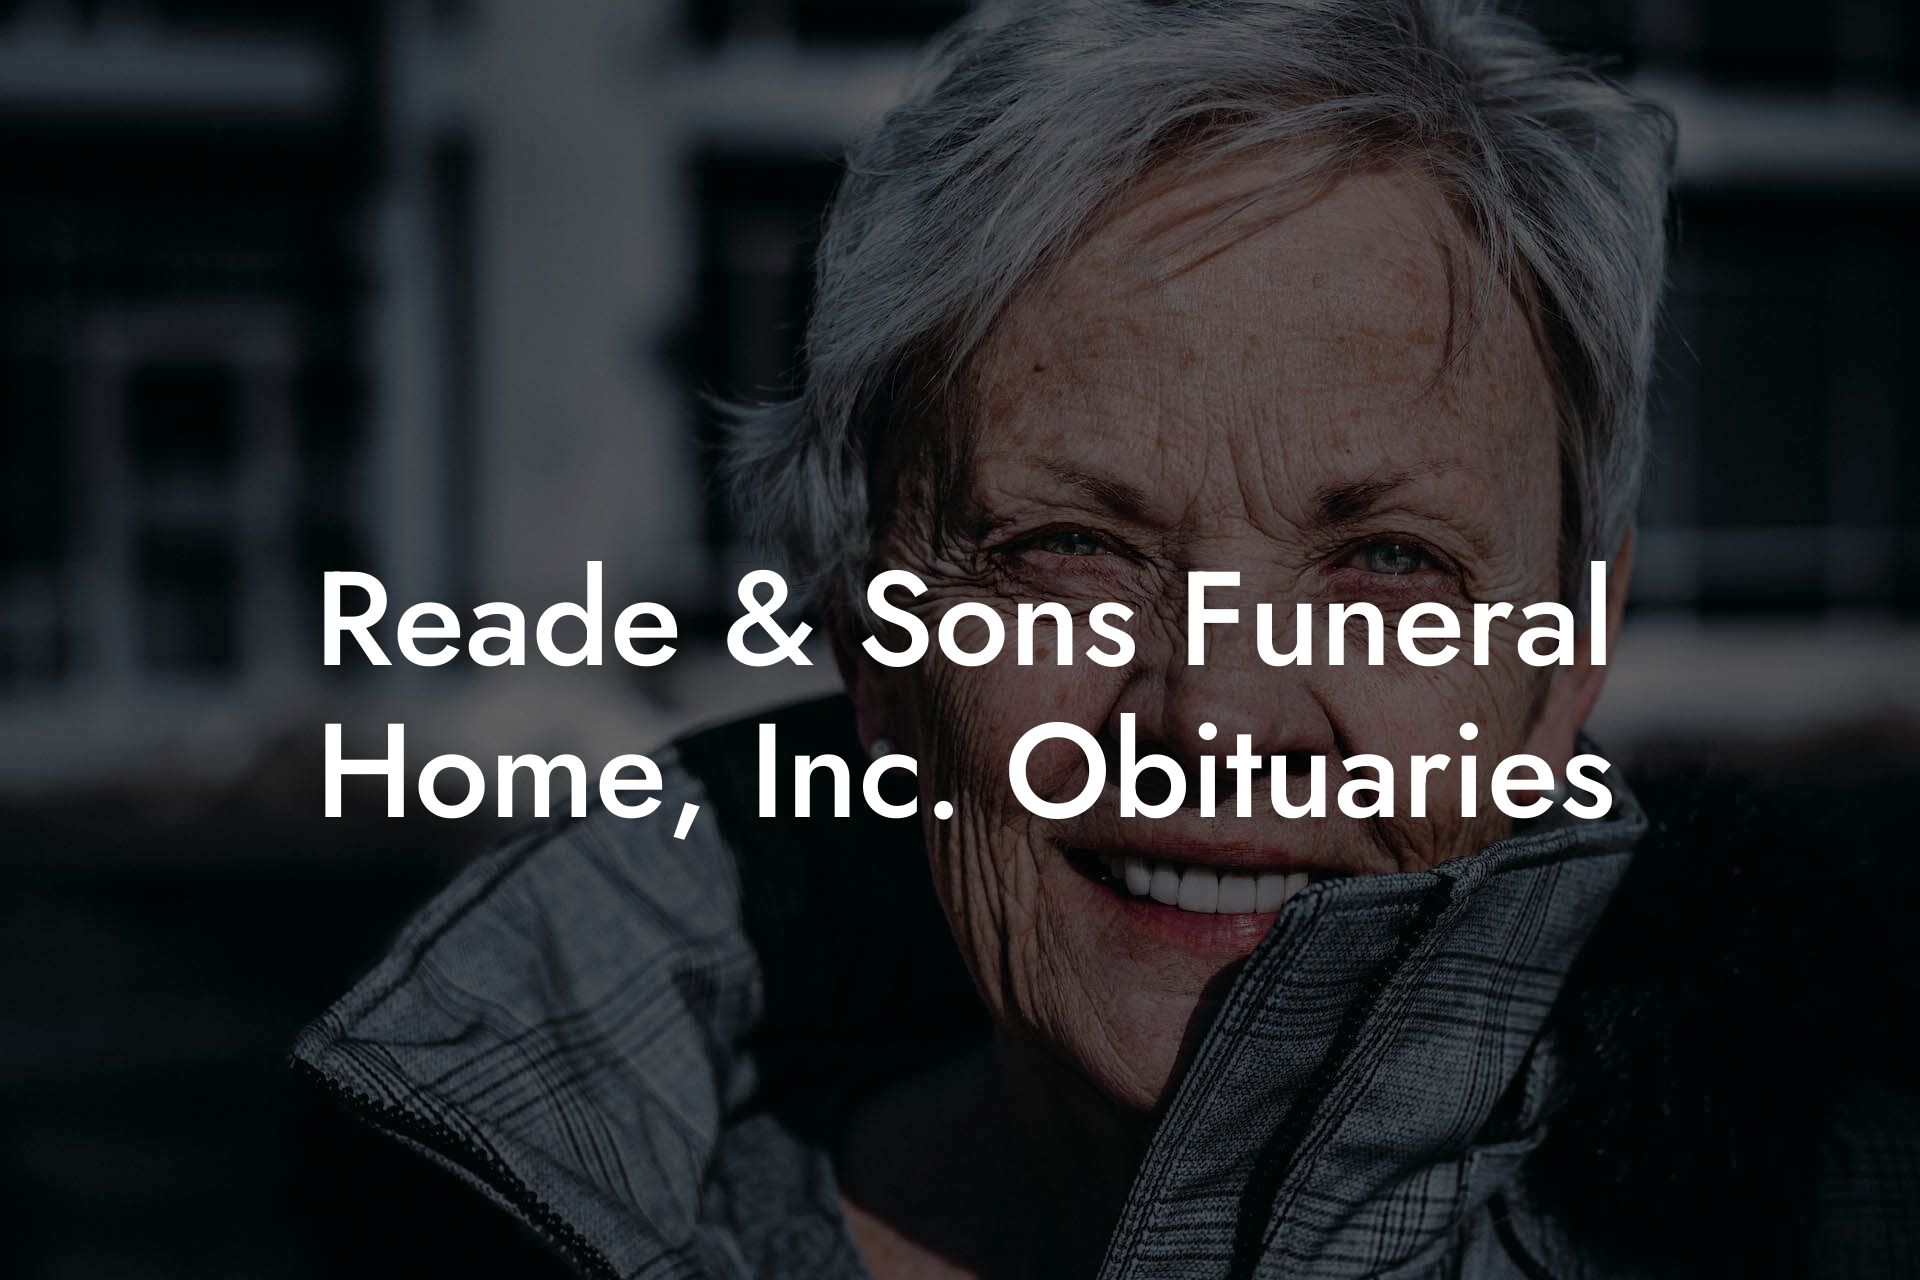 Reade & Sons Funeral Home, Inc. Obituaries